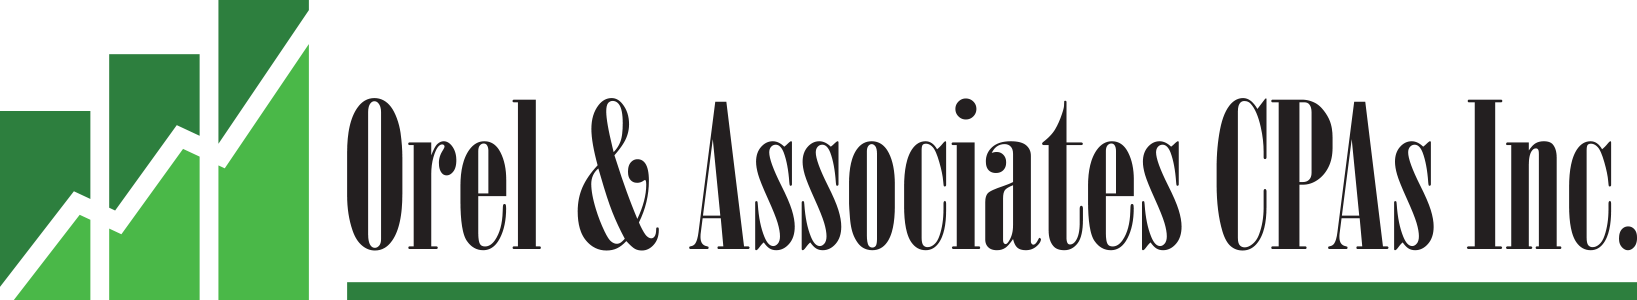 Orel & Associates CPAs Inc. Logo